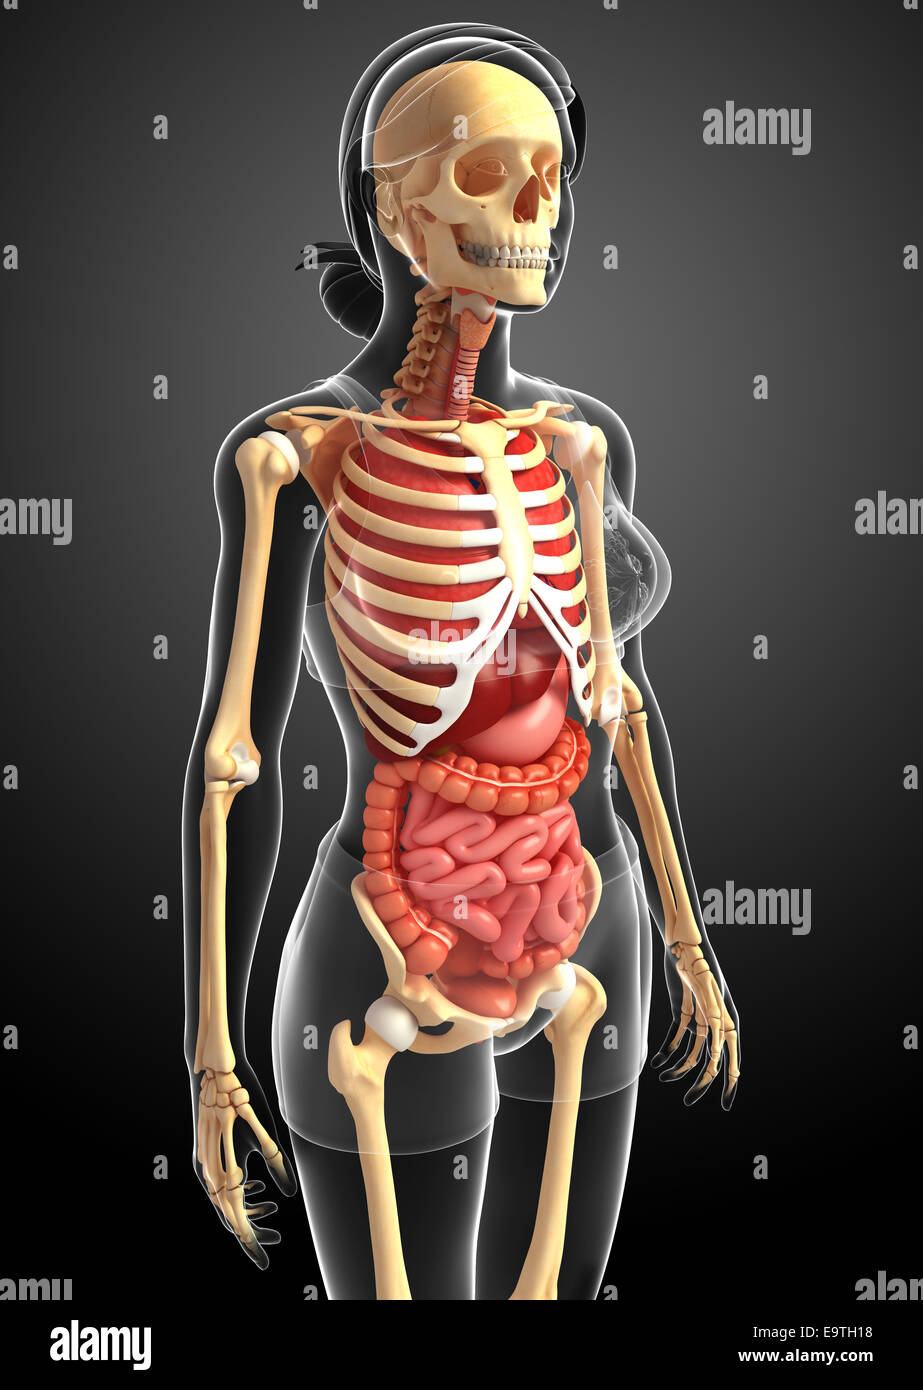 Illustration of female skeleton digestive system Stock Photo, Royalty